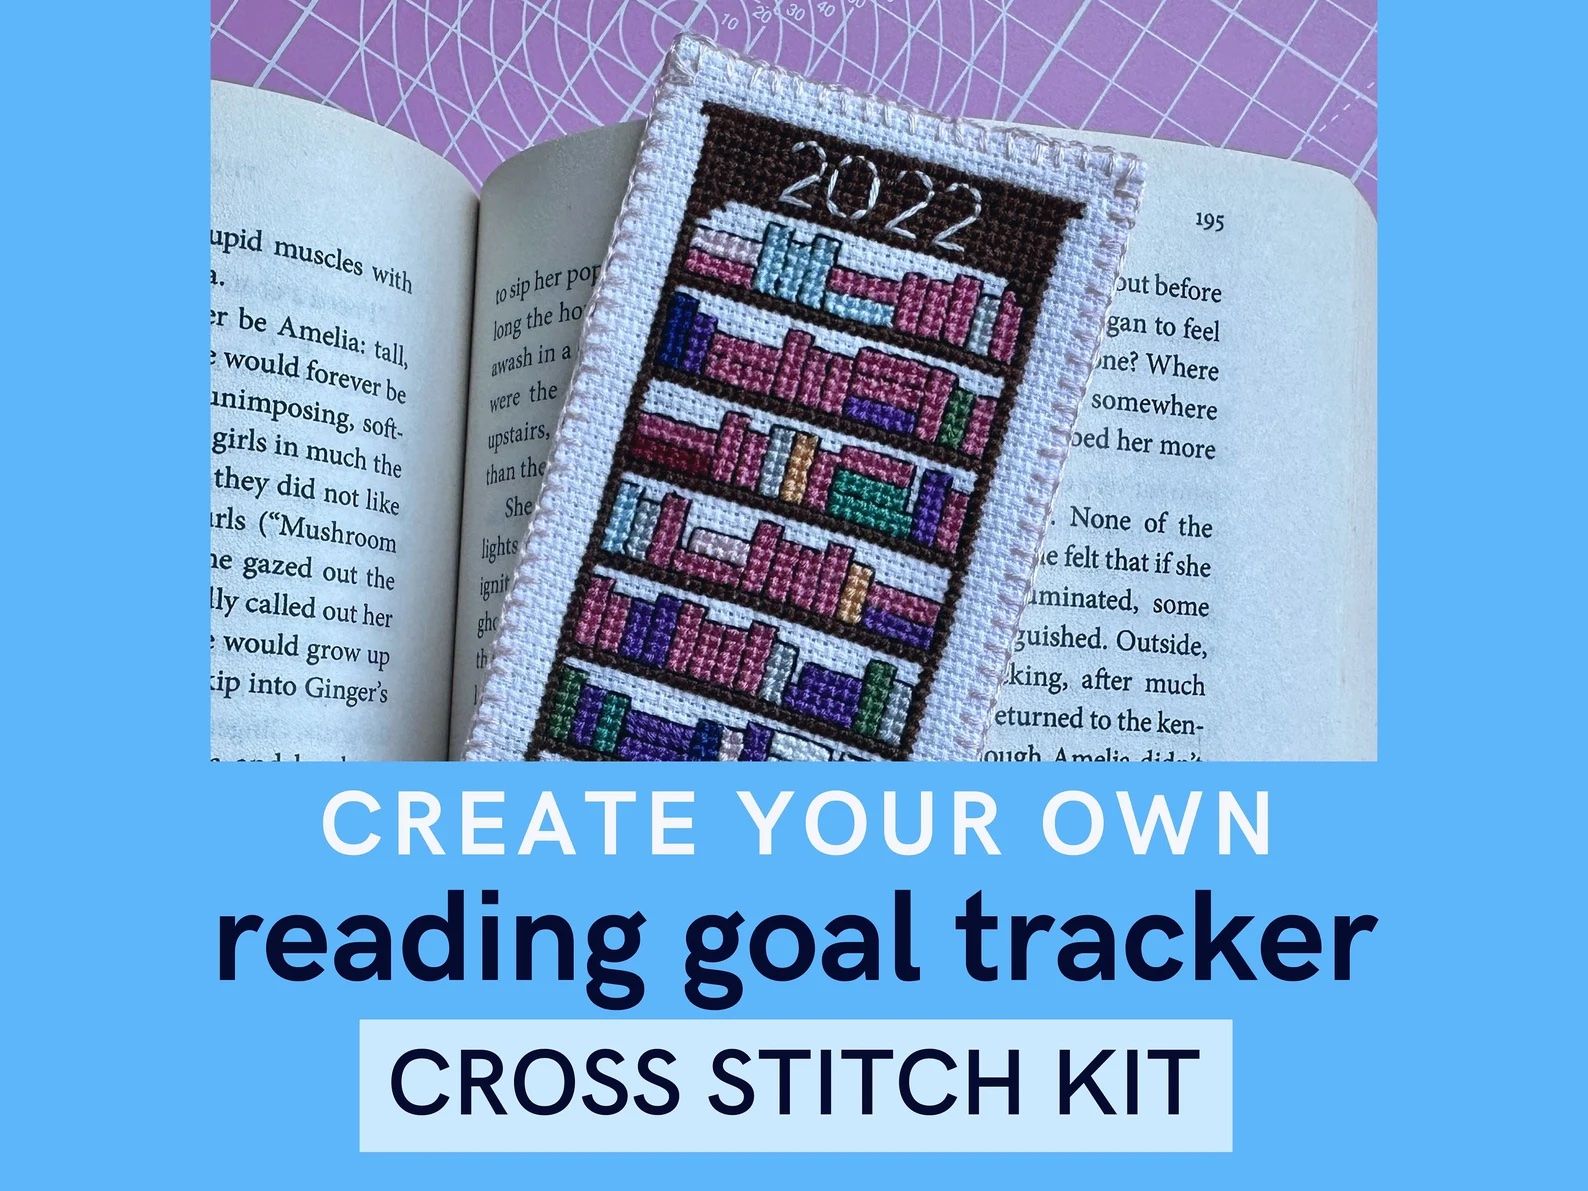 kit for a cross stitch bookshelf reading tracker